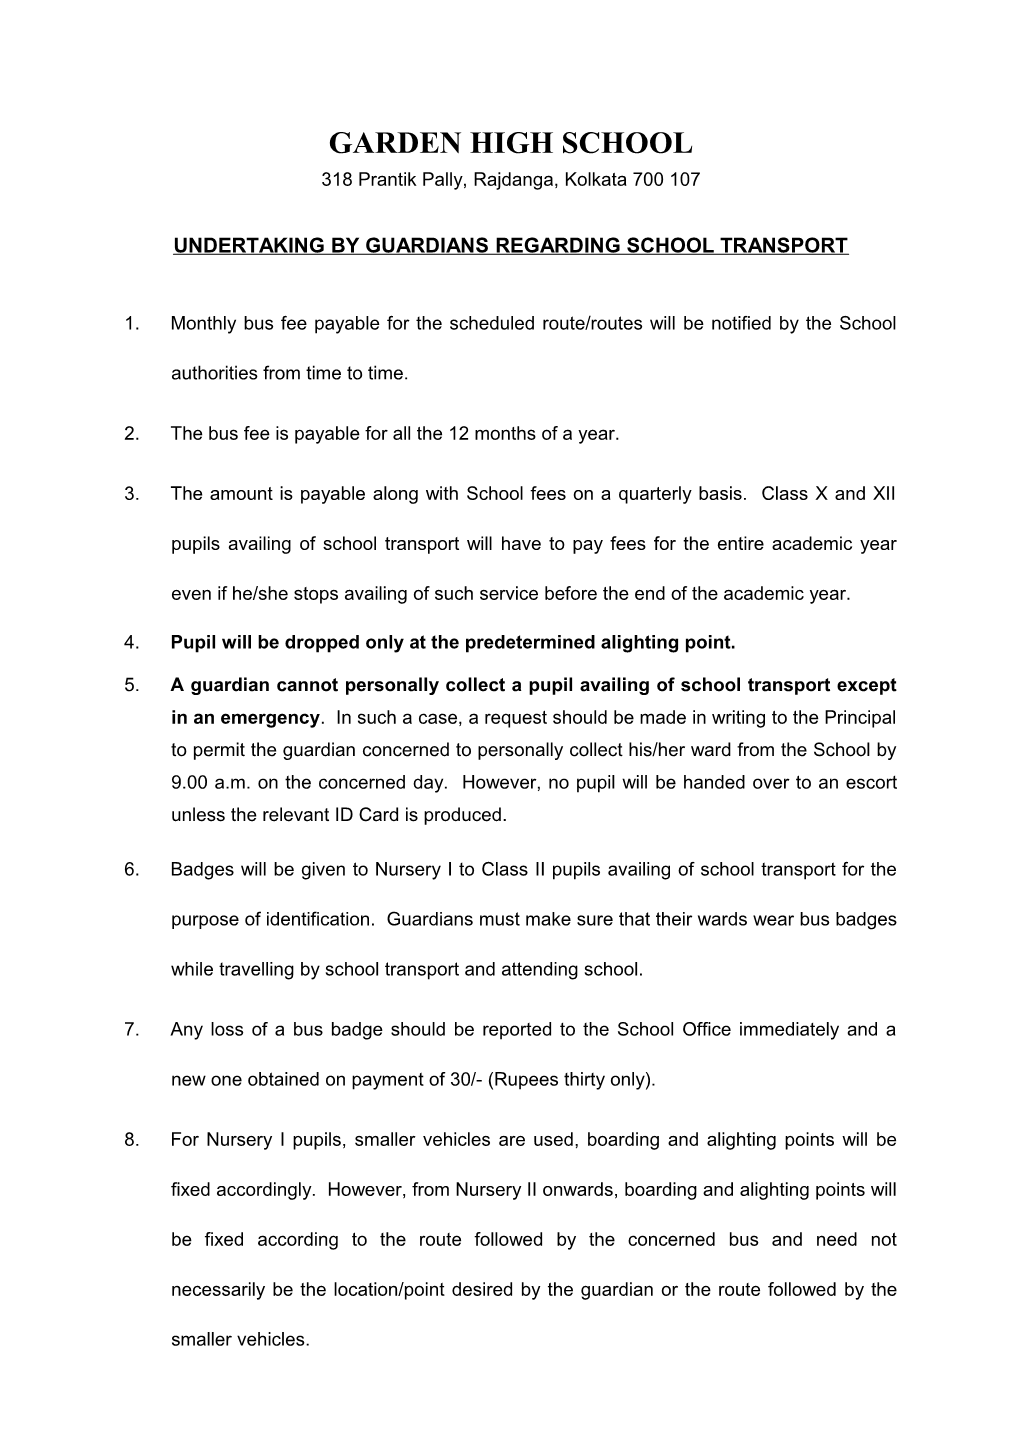 Undertaking by Guardians Regarding School Transport